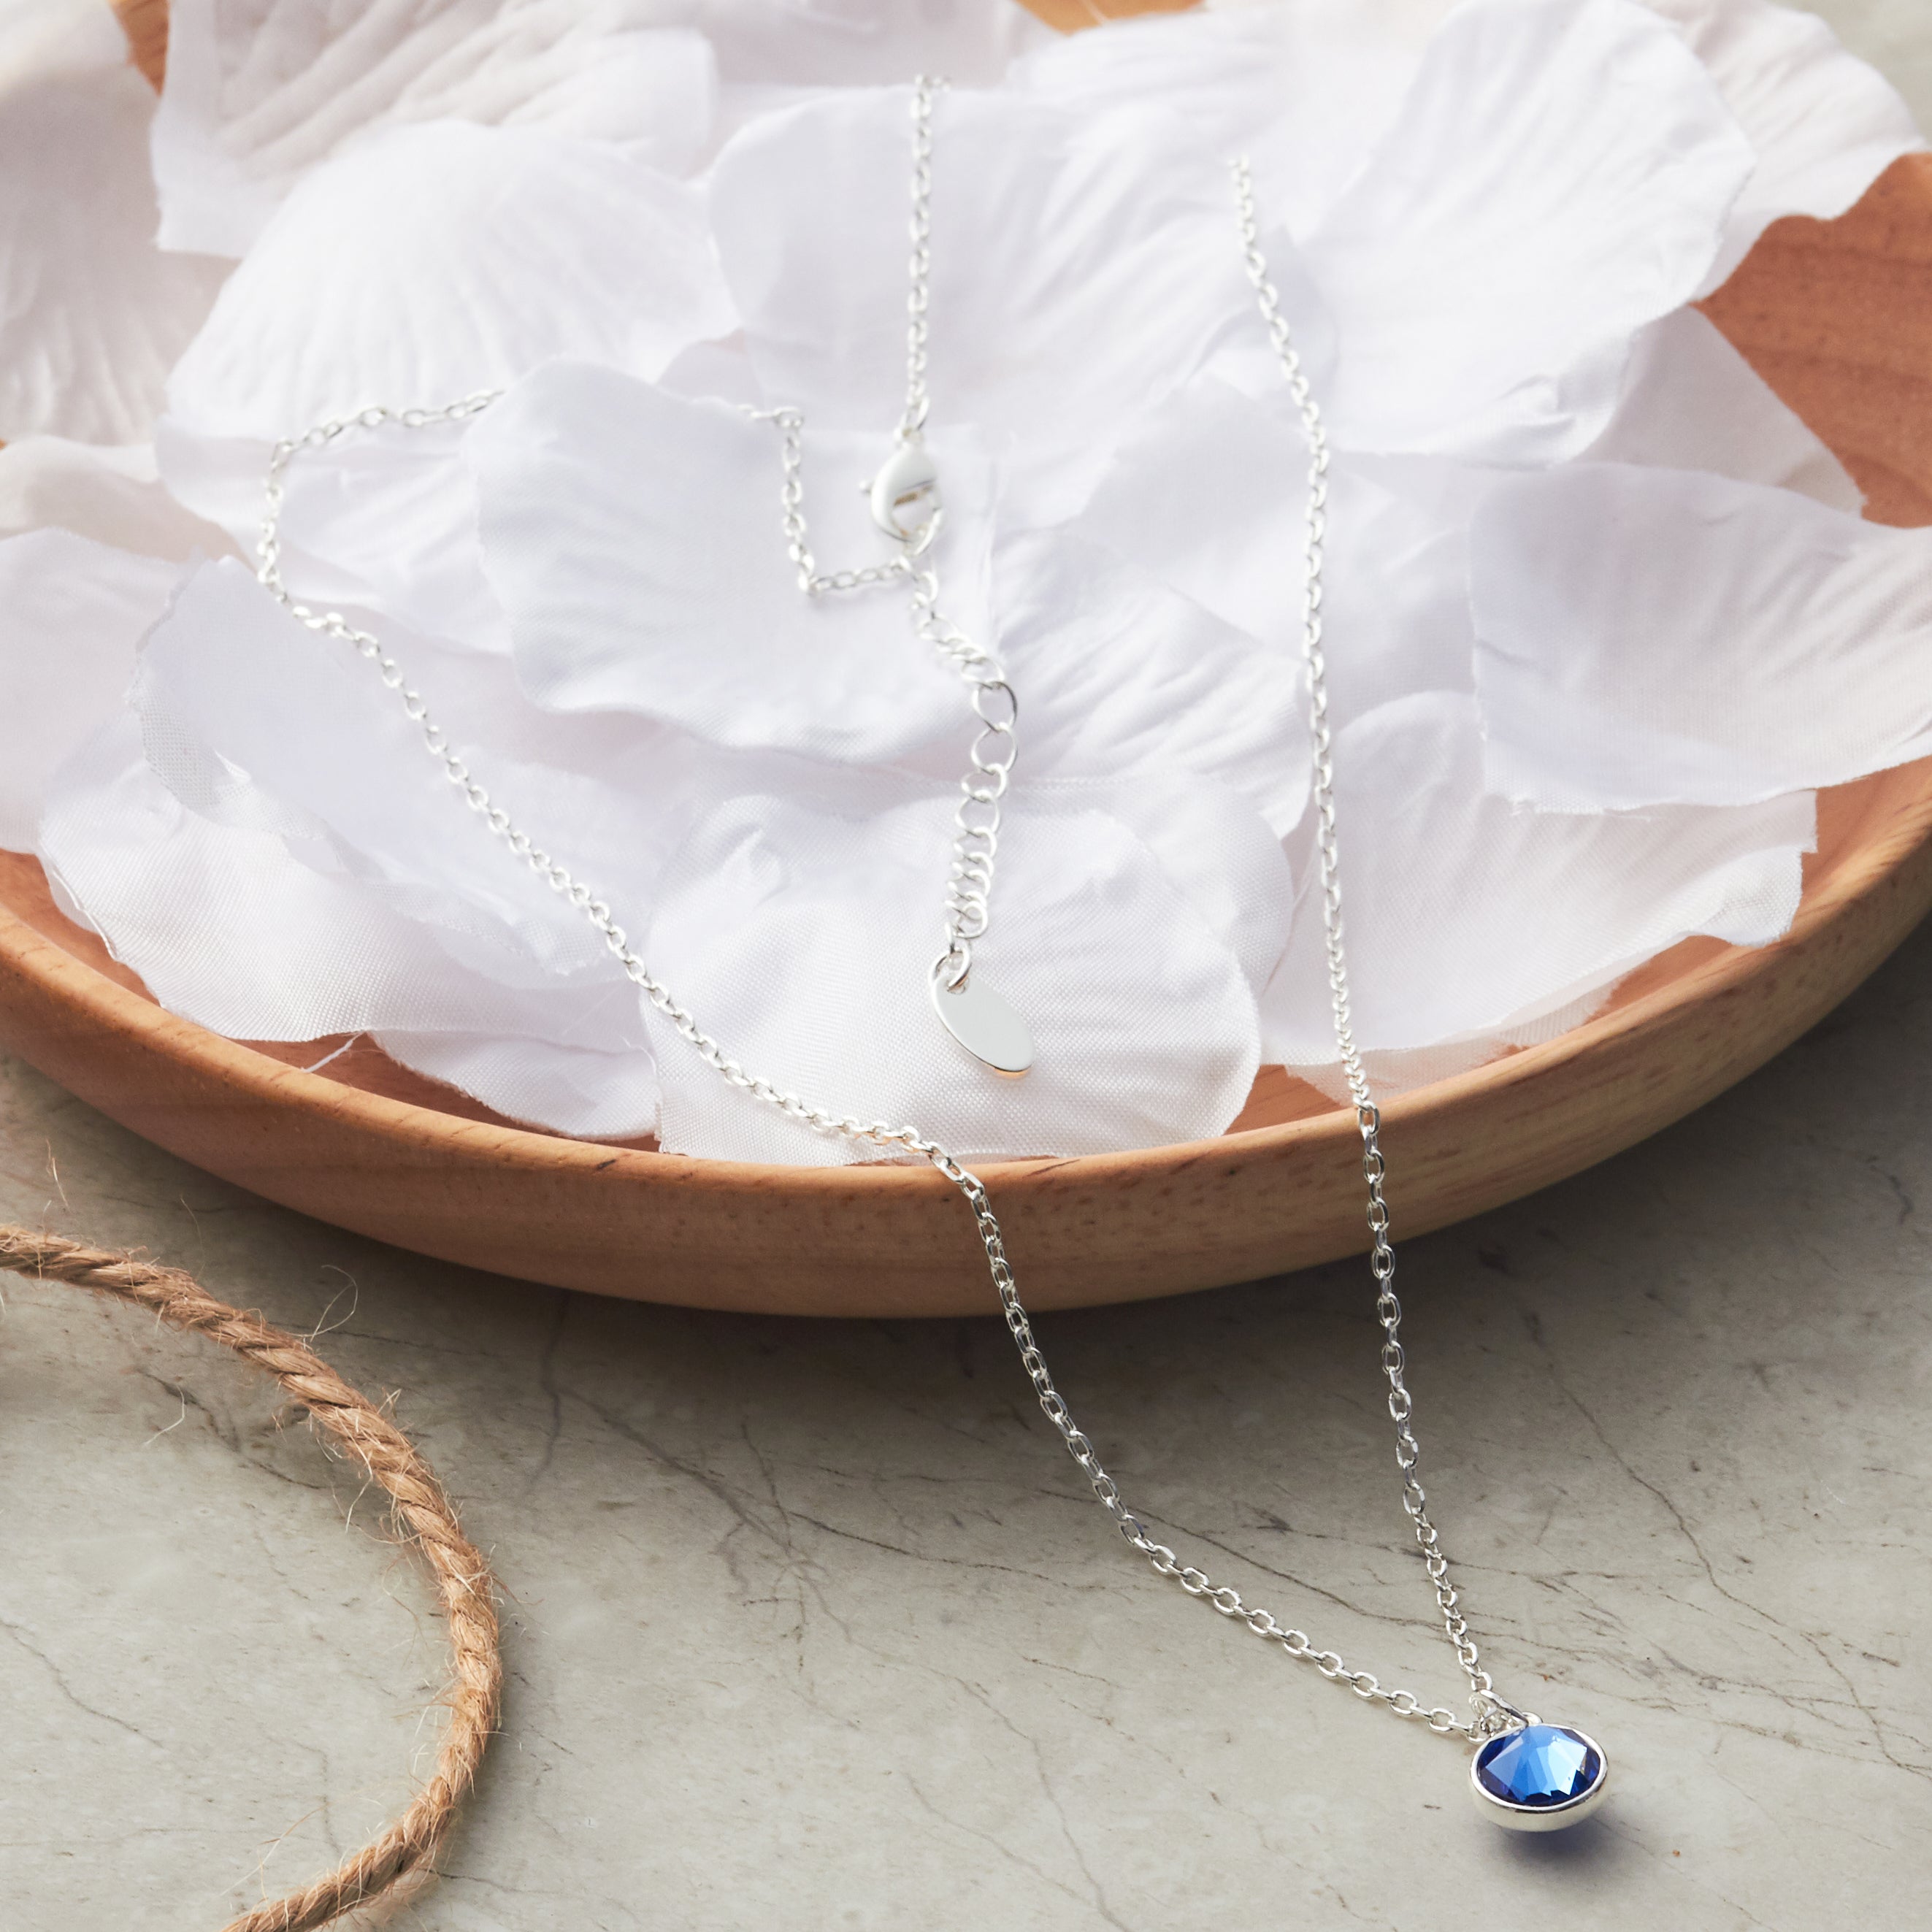 Dark Blue Crystal Necklace Created with Zircondia® Crystals